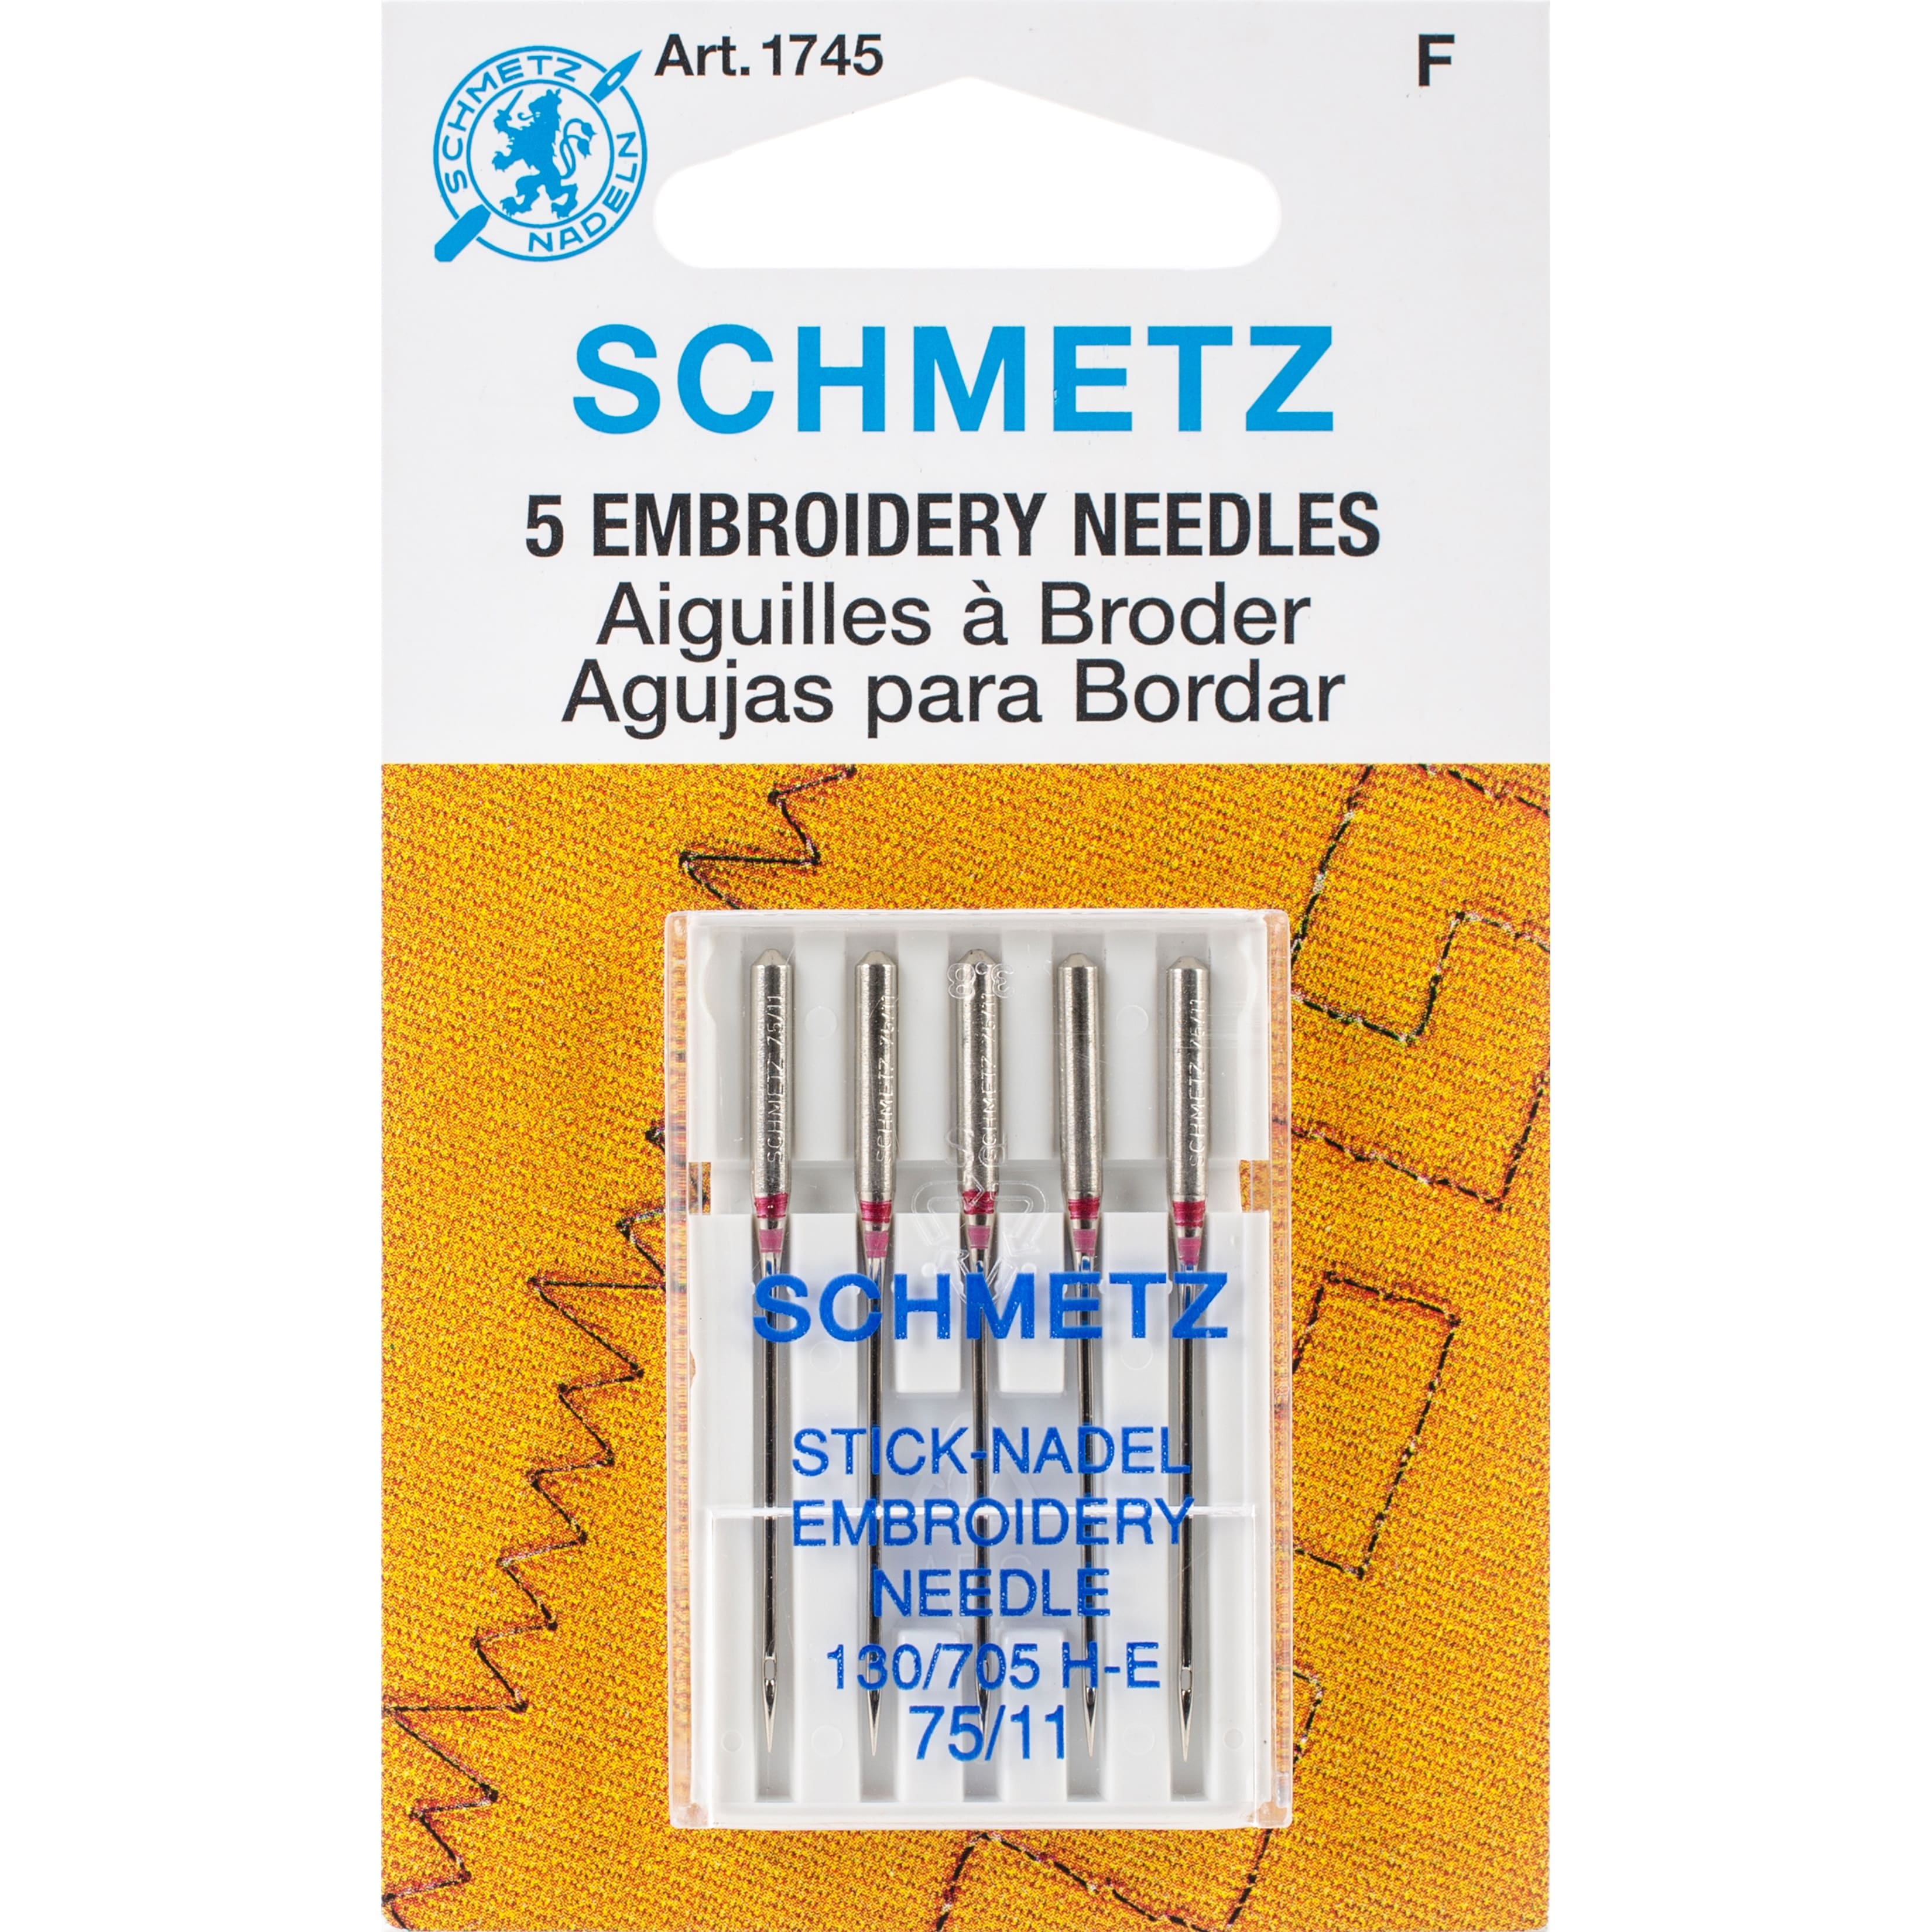 Euro-Notions Schmetz Embroidery Machine Needles, 11/75, 5ct.